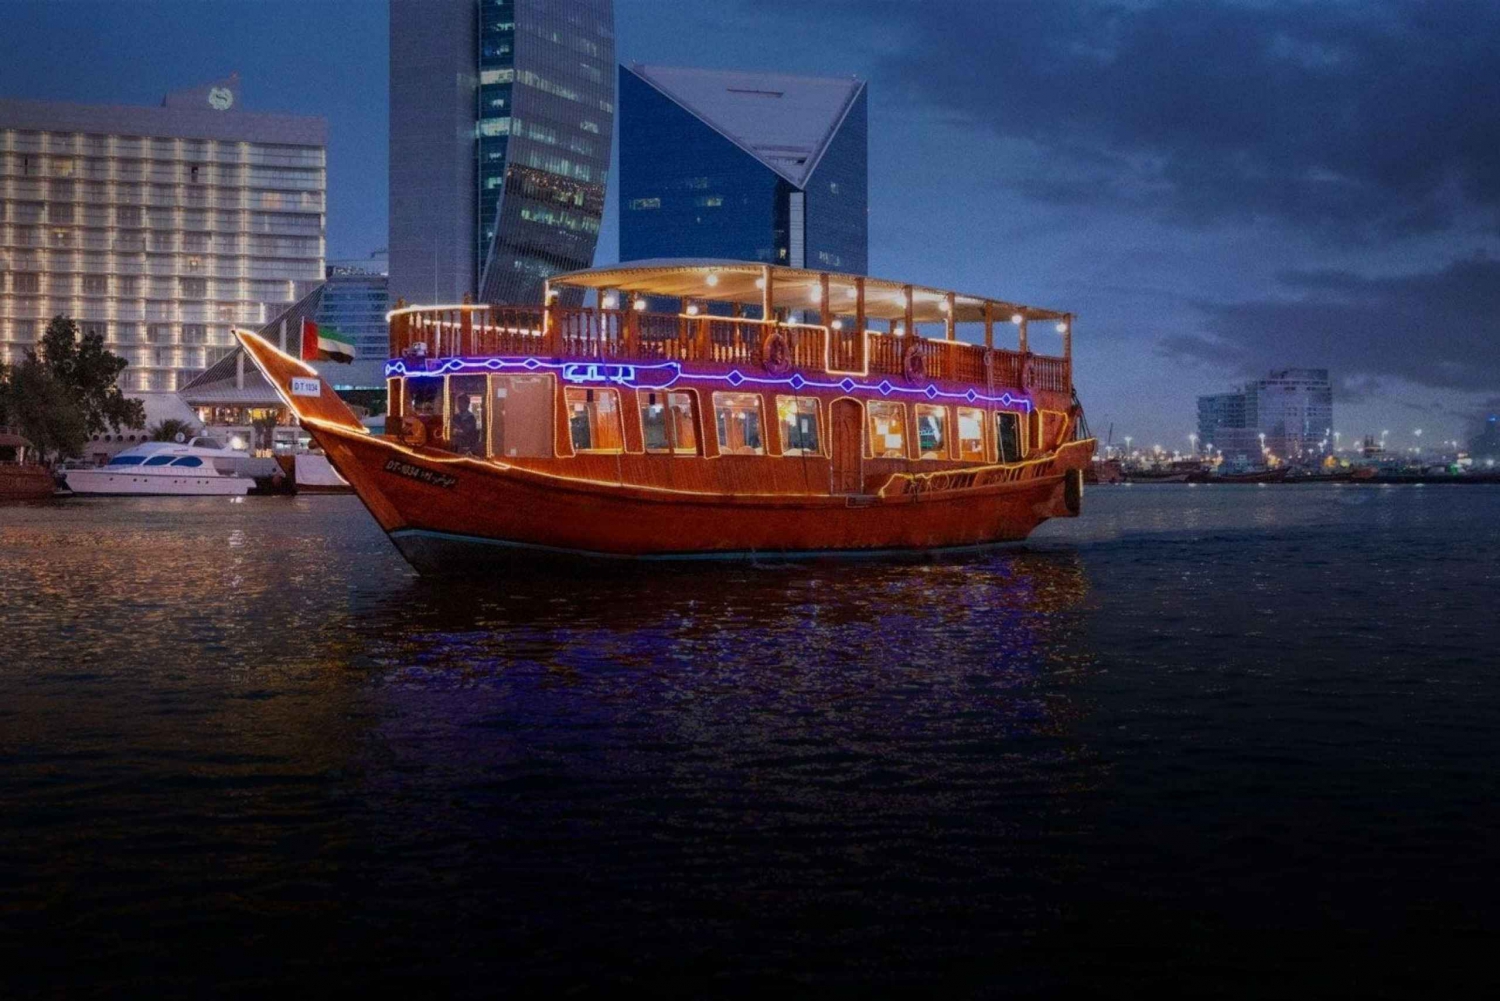 Dubai: Marina Dhow Cruise with Dinner and Entertainment